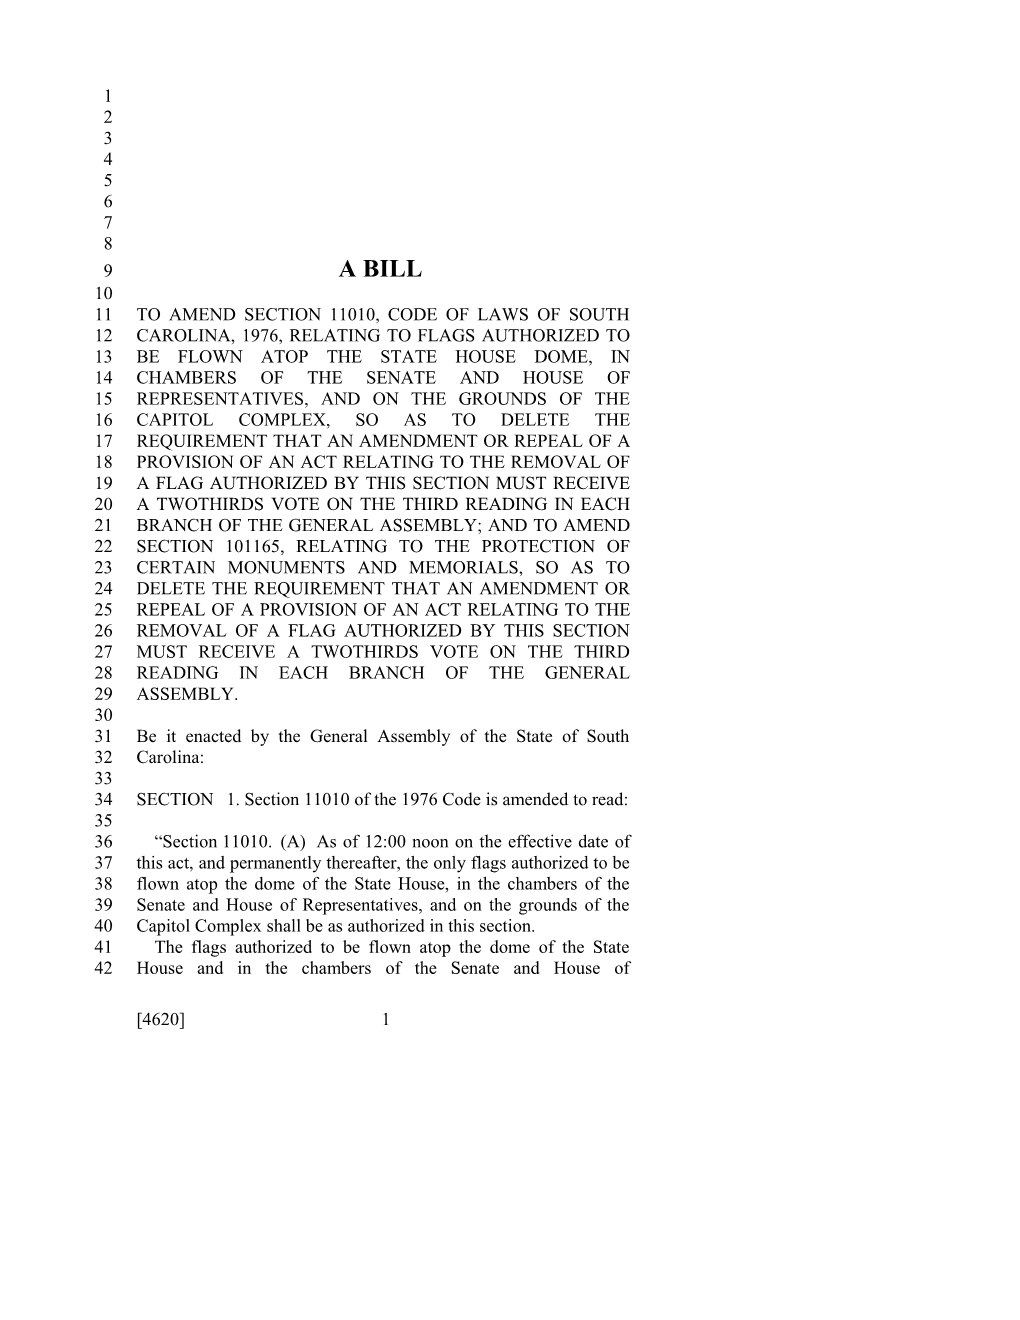 2015-2016 Bill 4620 Text of Previous Version (Jan. 12, 2016) - South Carolina Legislature Online